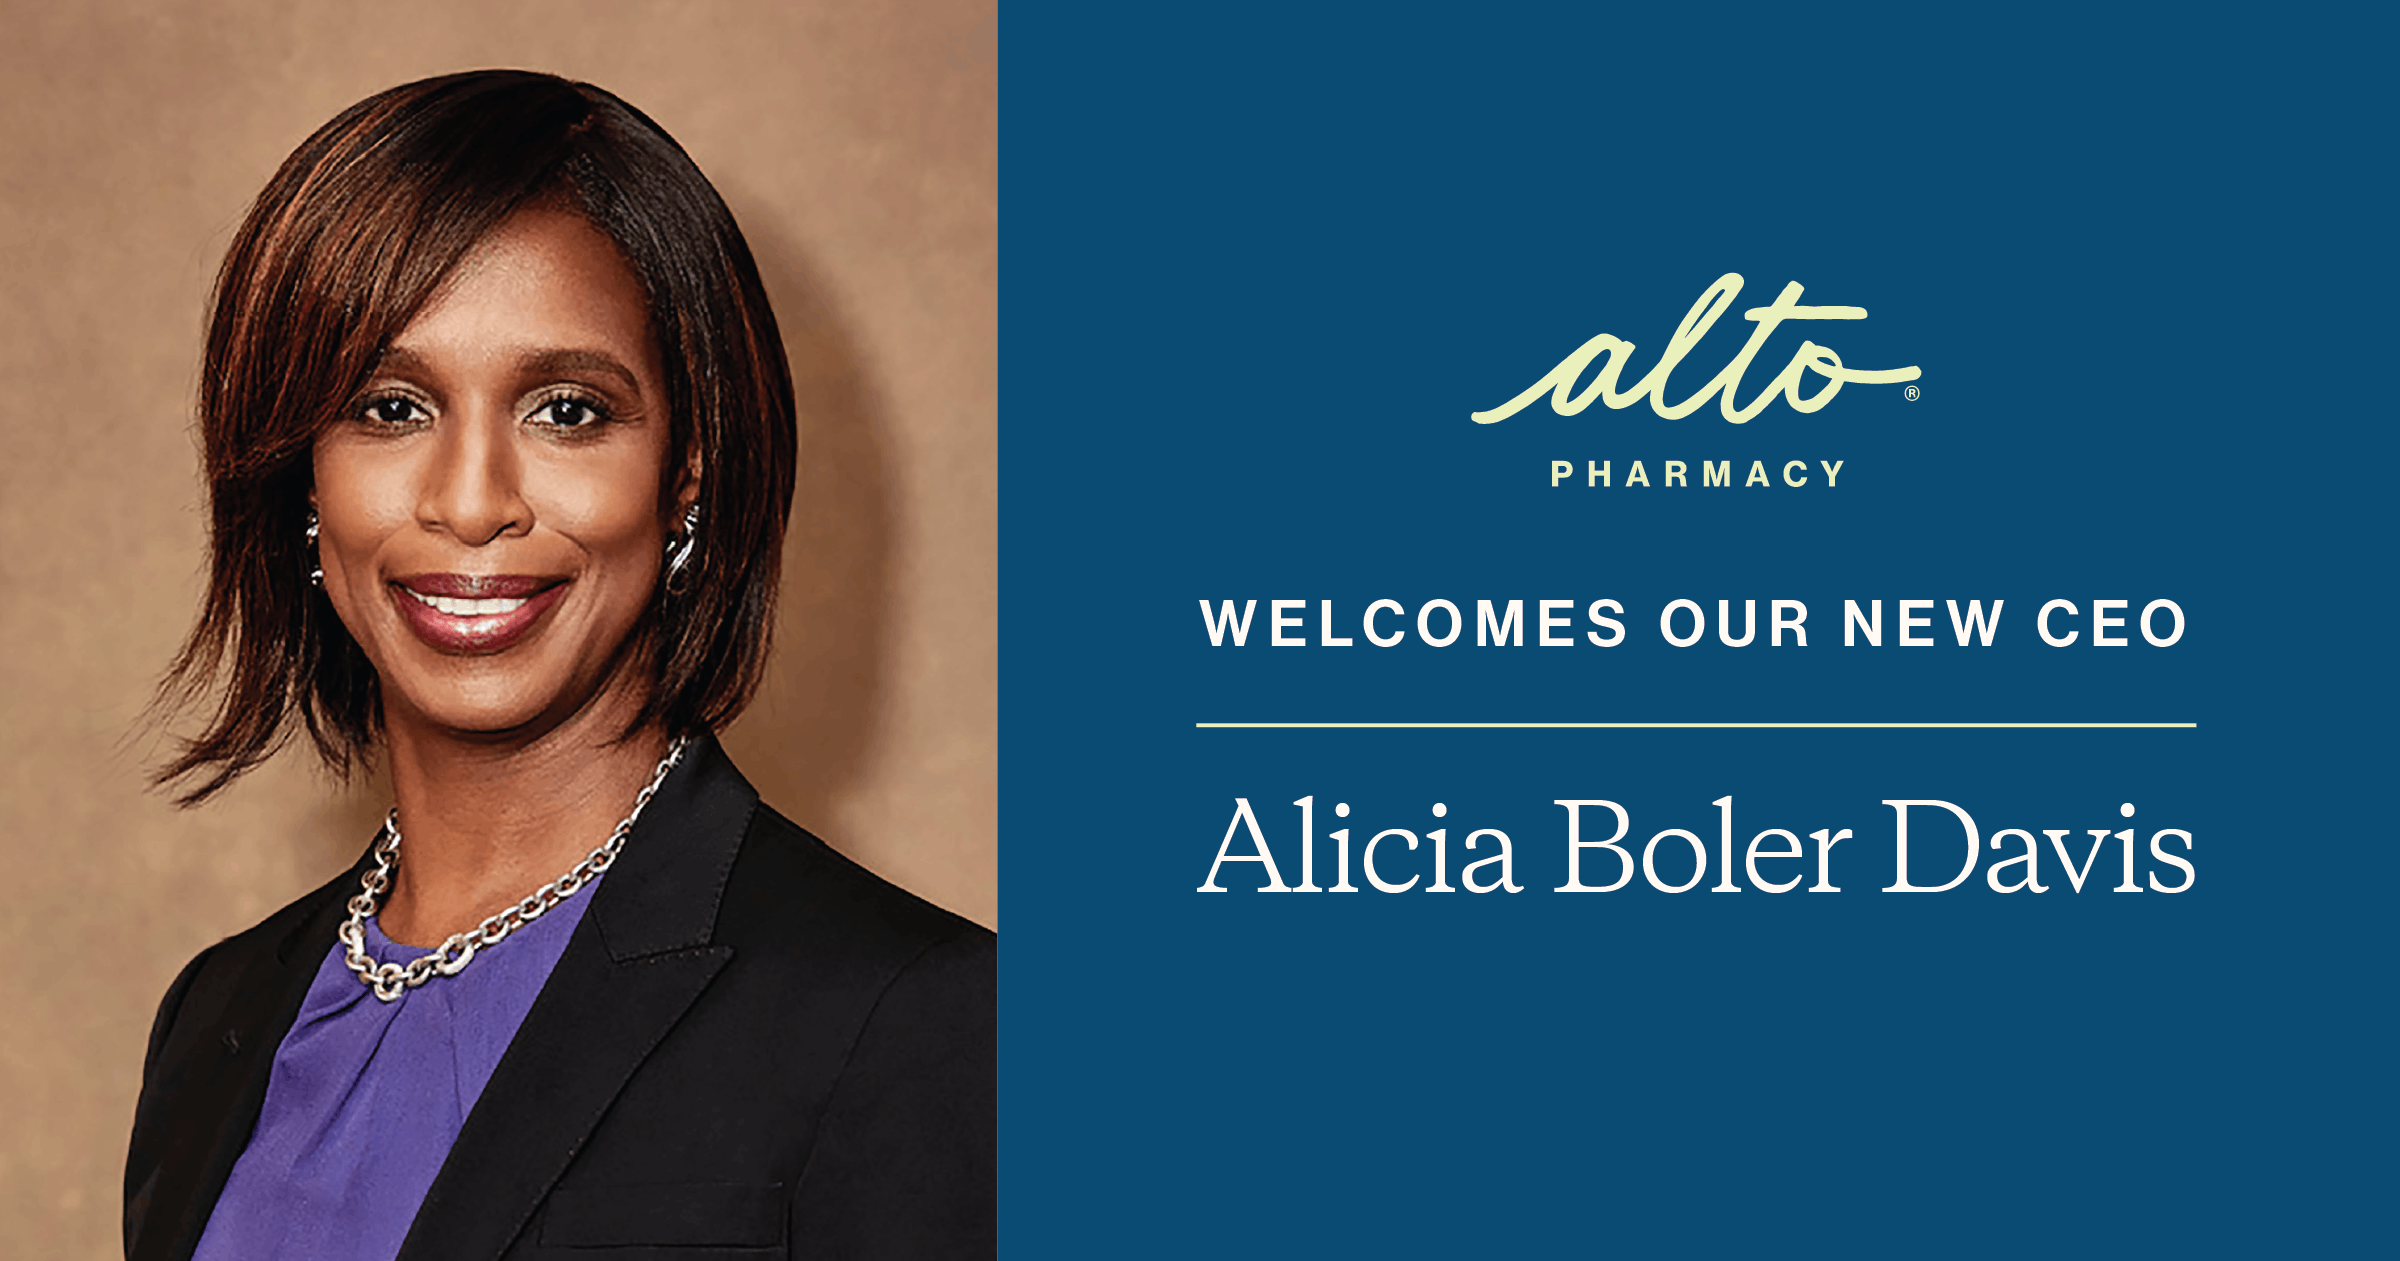 Alto's new CEO, Alicia Boler Davis